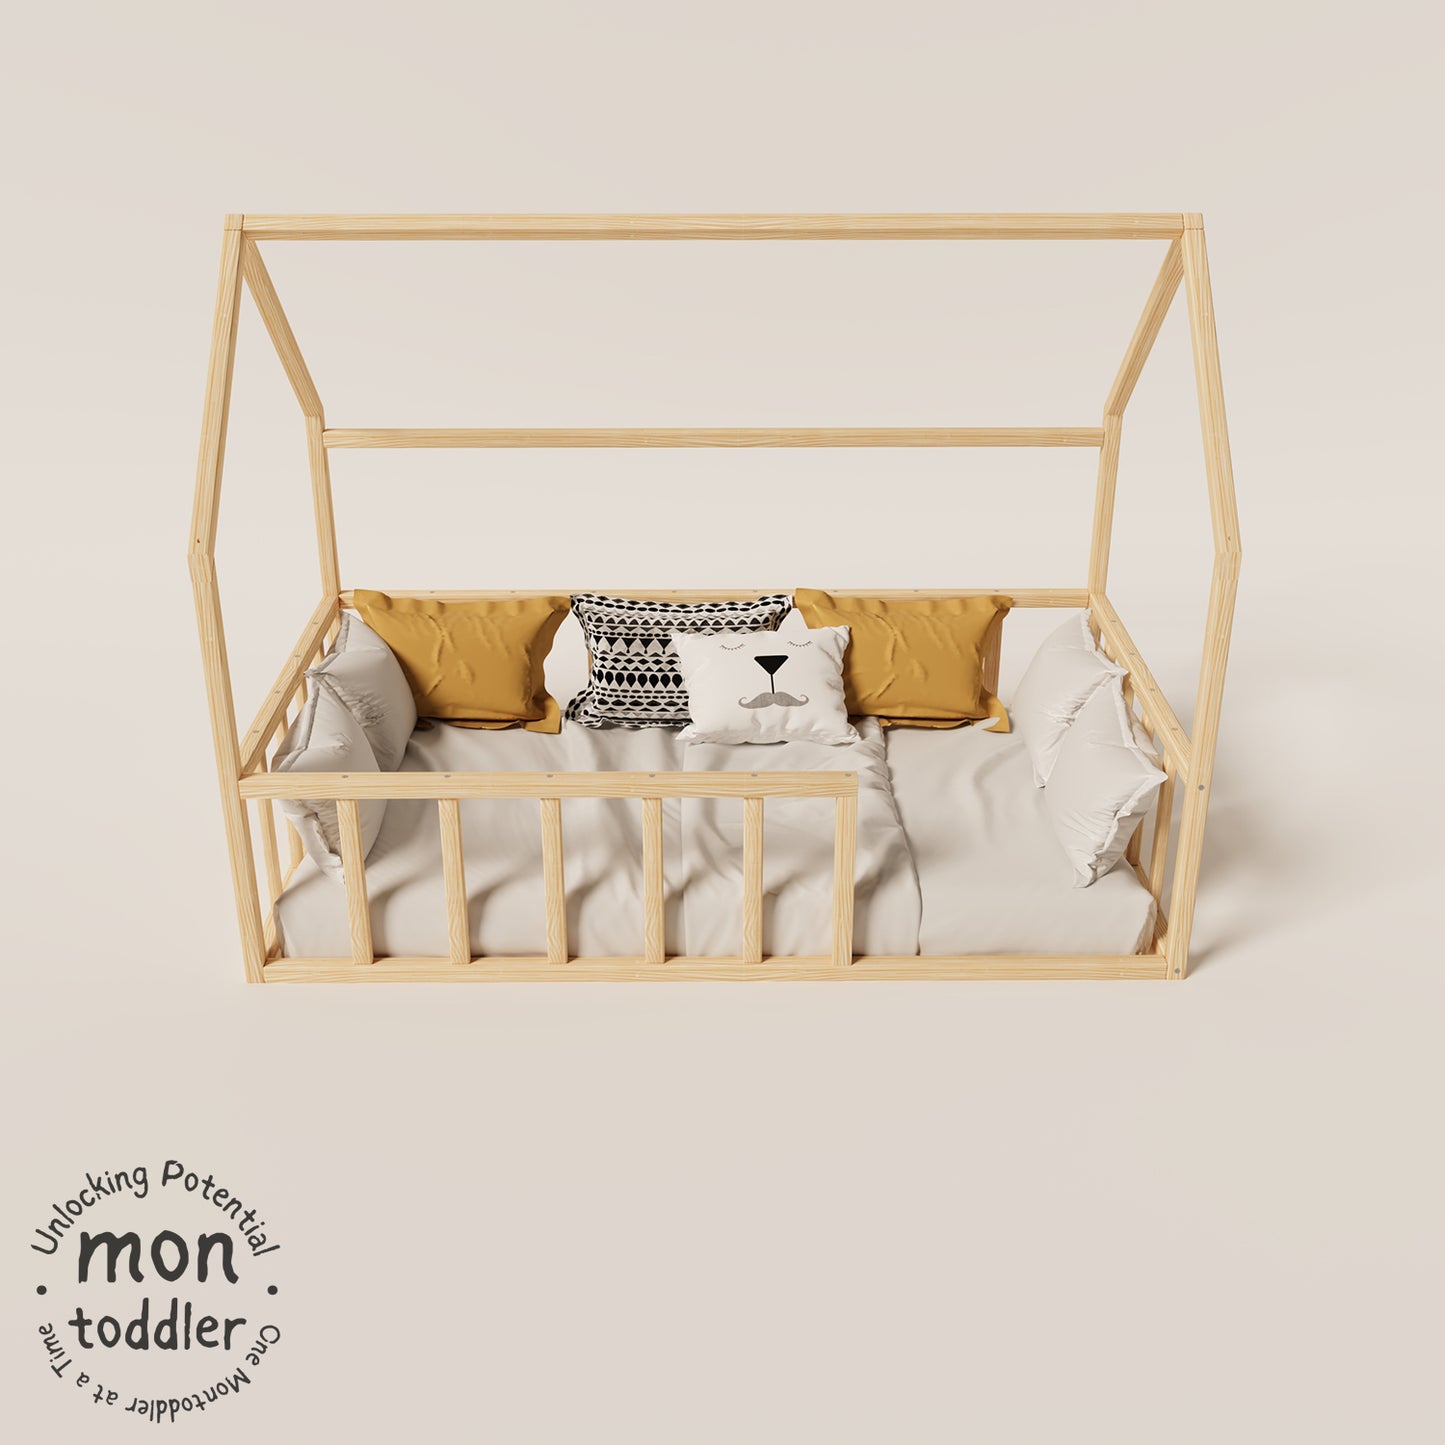 Montessori House Bed